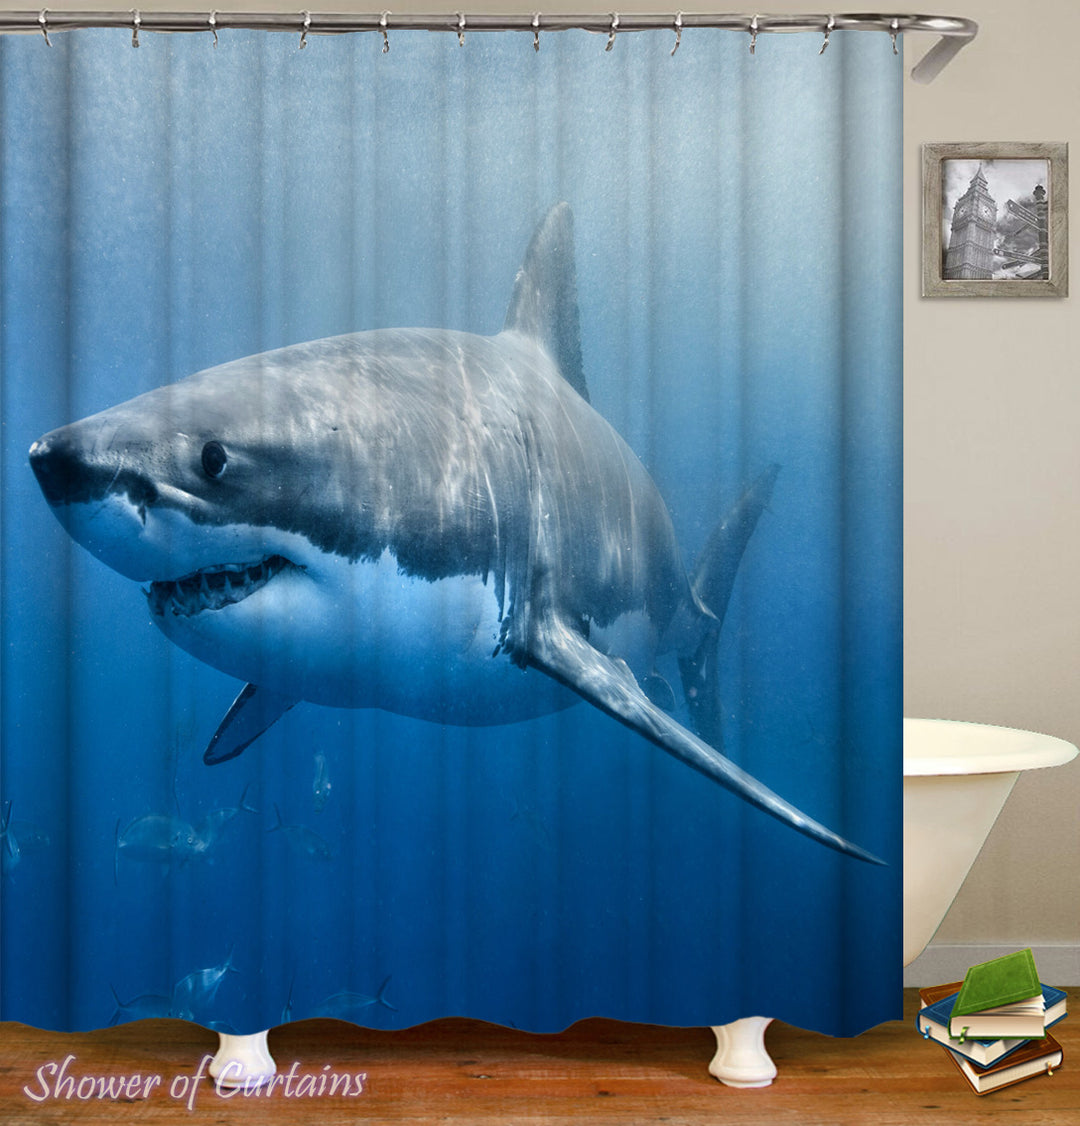 Watermelon Shark Bathroom Shower Curtain Accessories for Women Men